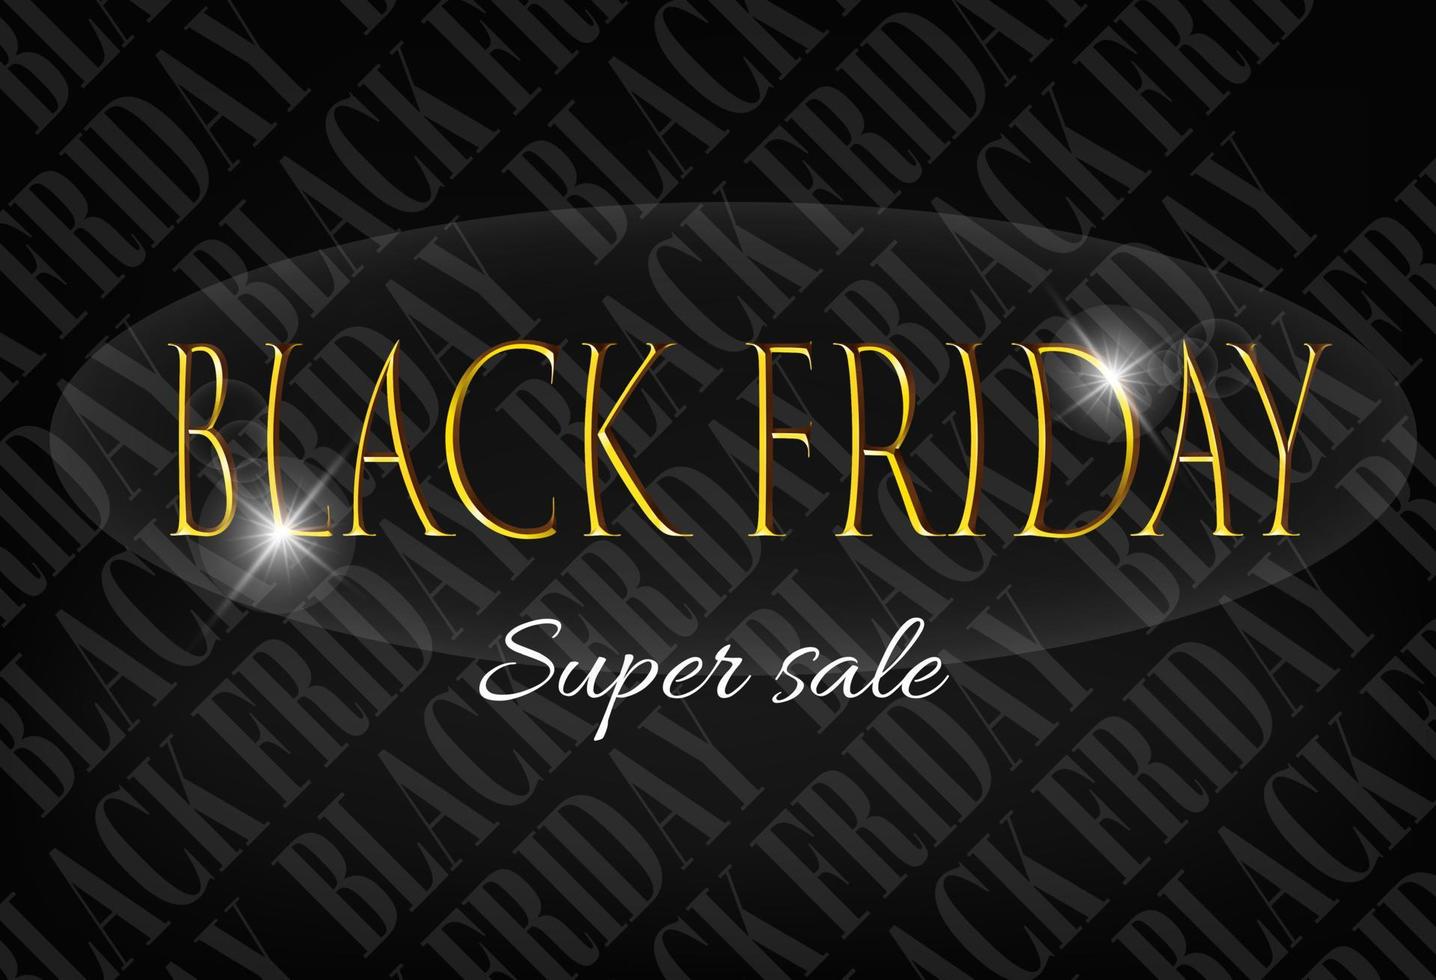 Black friday super sale gold inscription  design template design for advertising, banners, leaflets and flyers vector